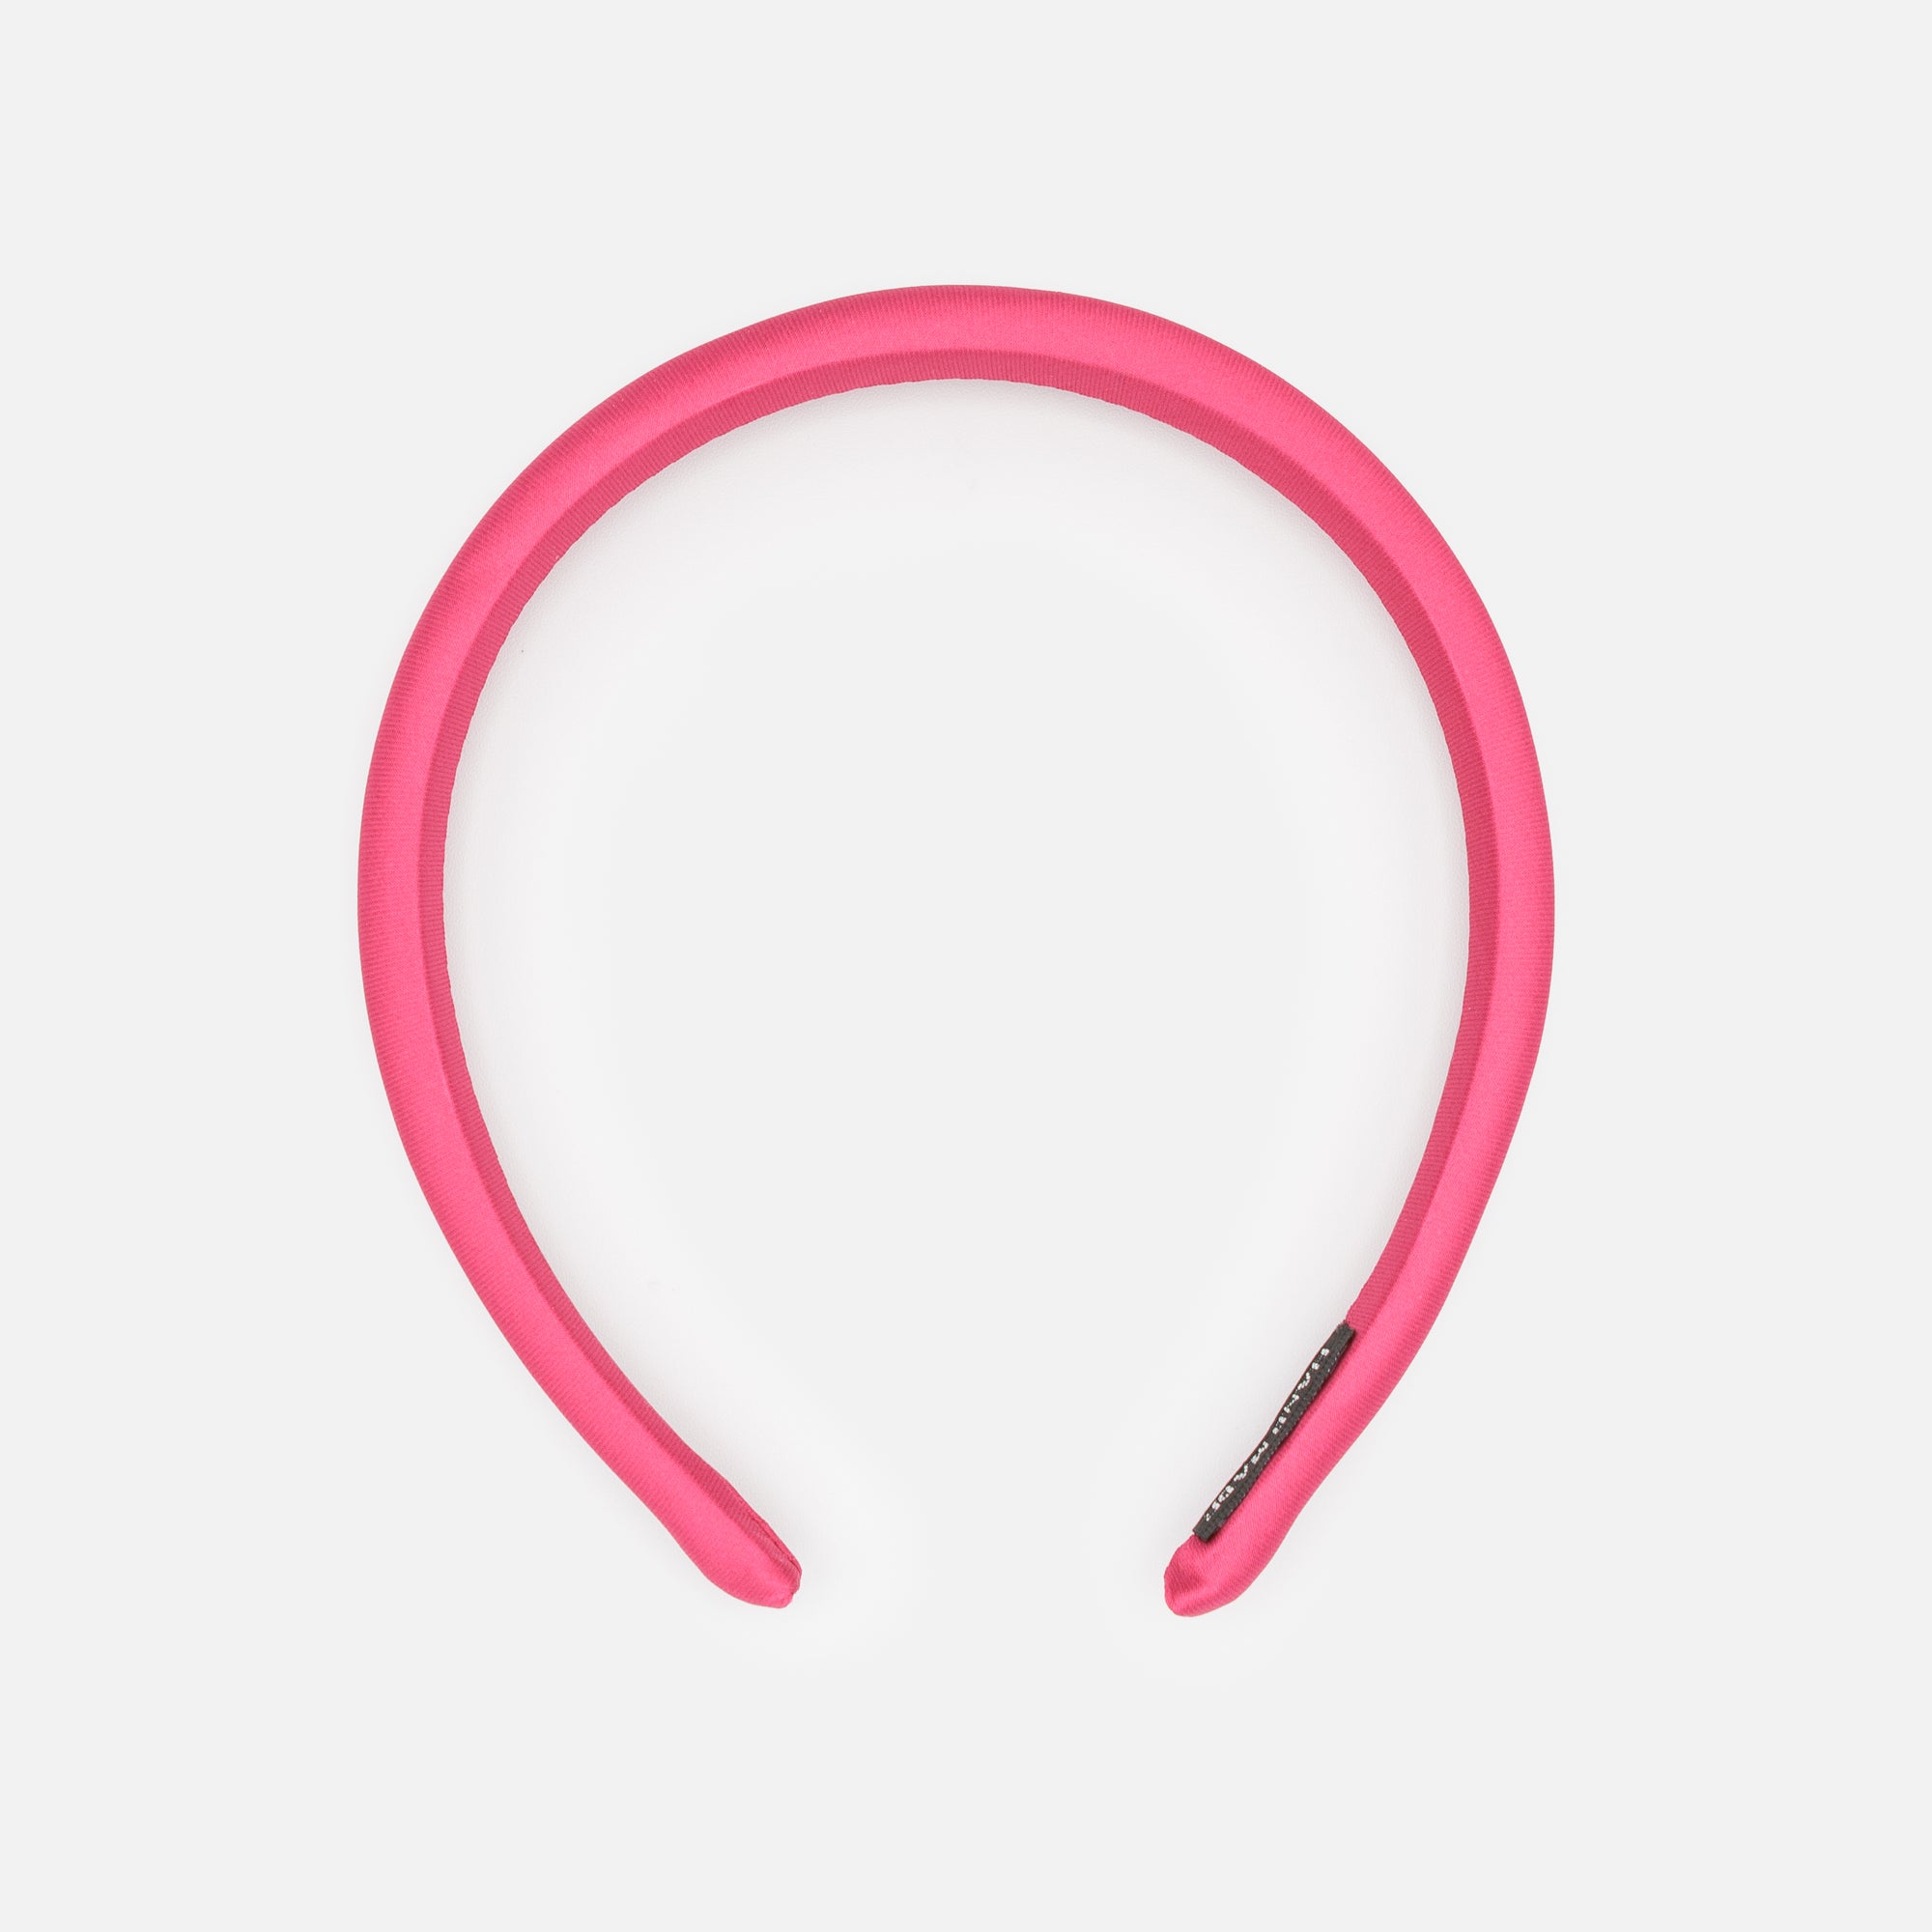 Thin pink headband